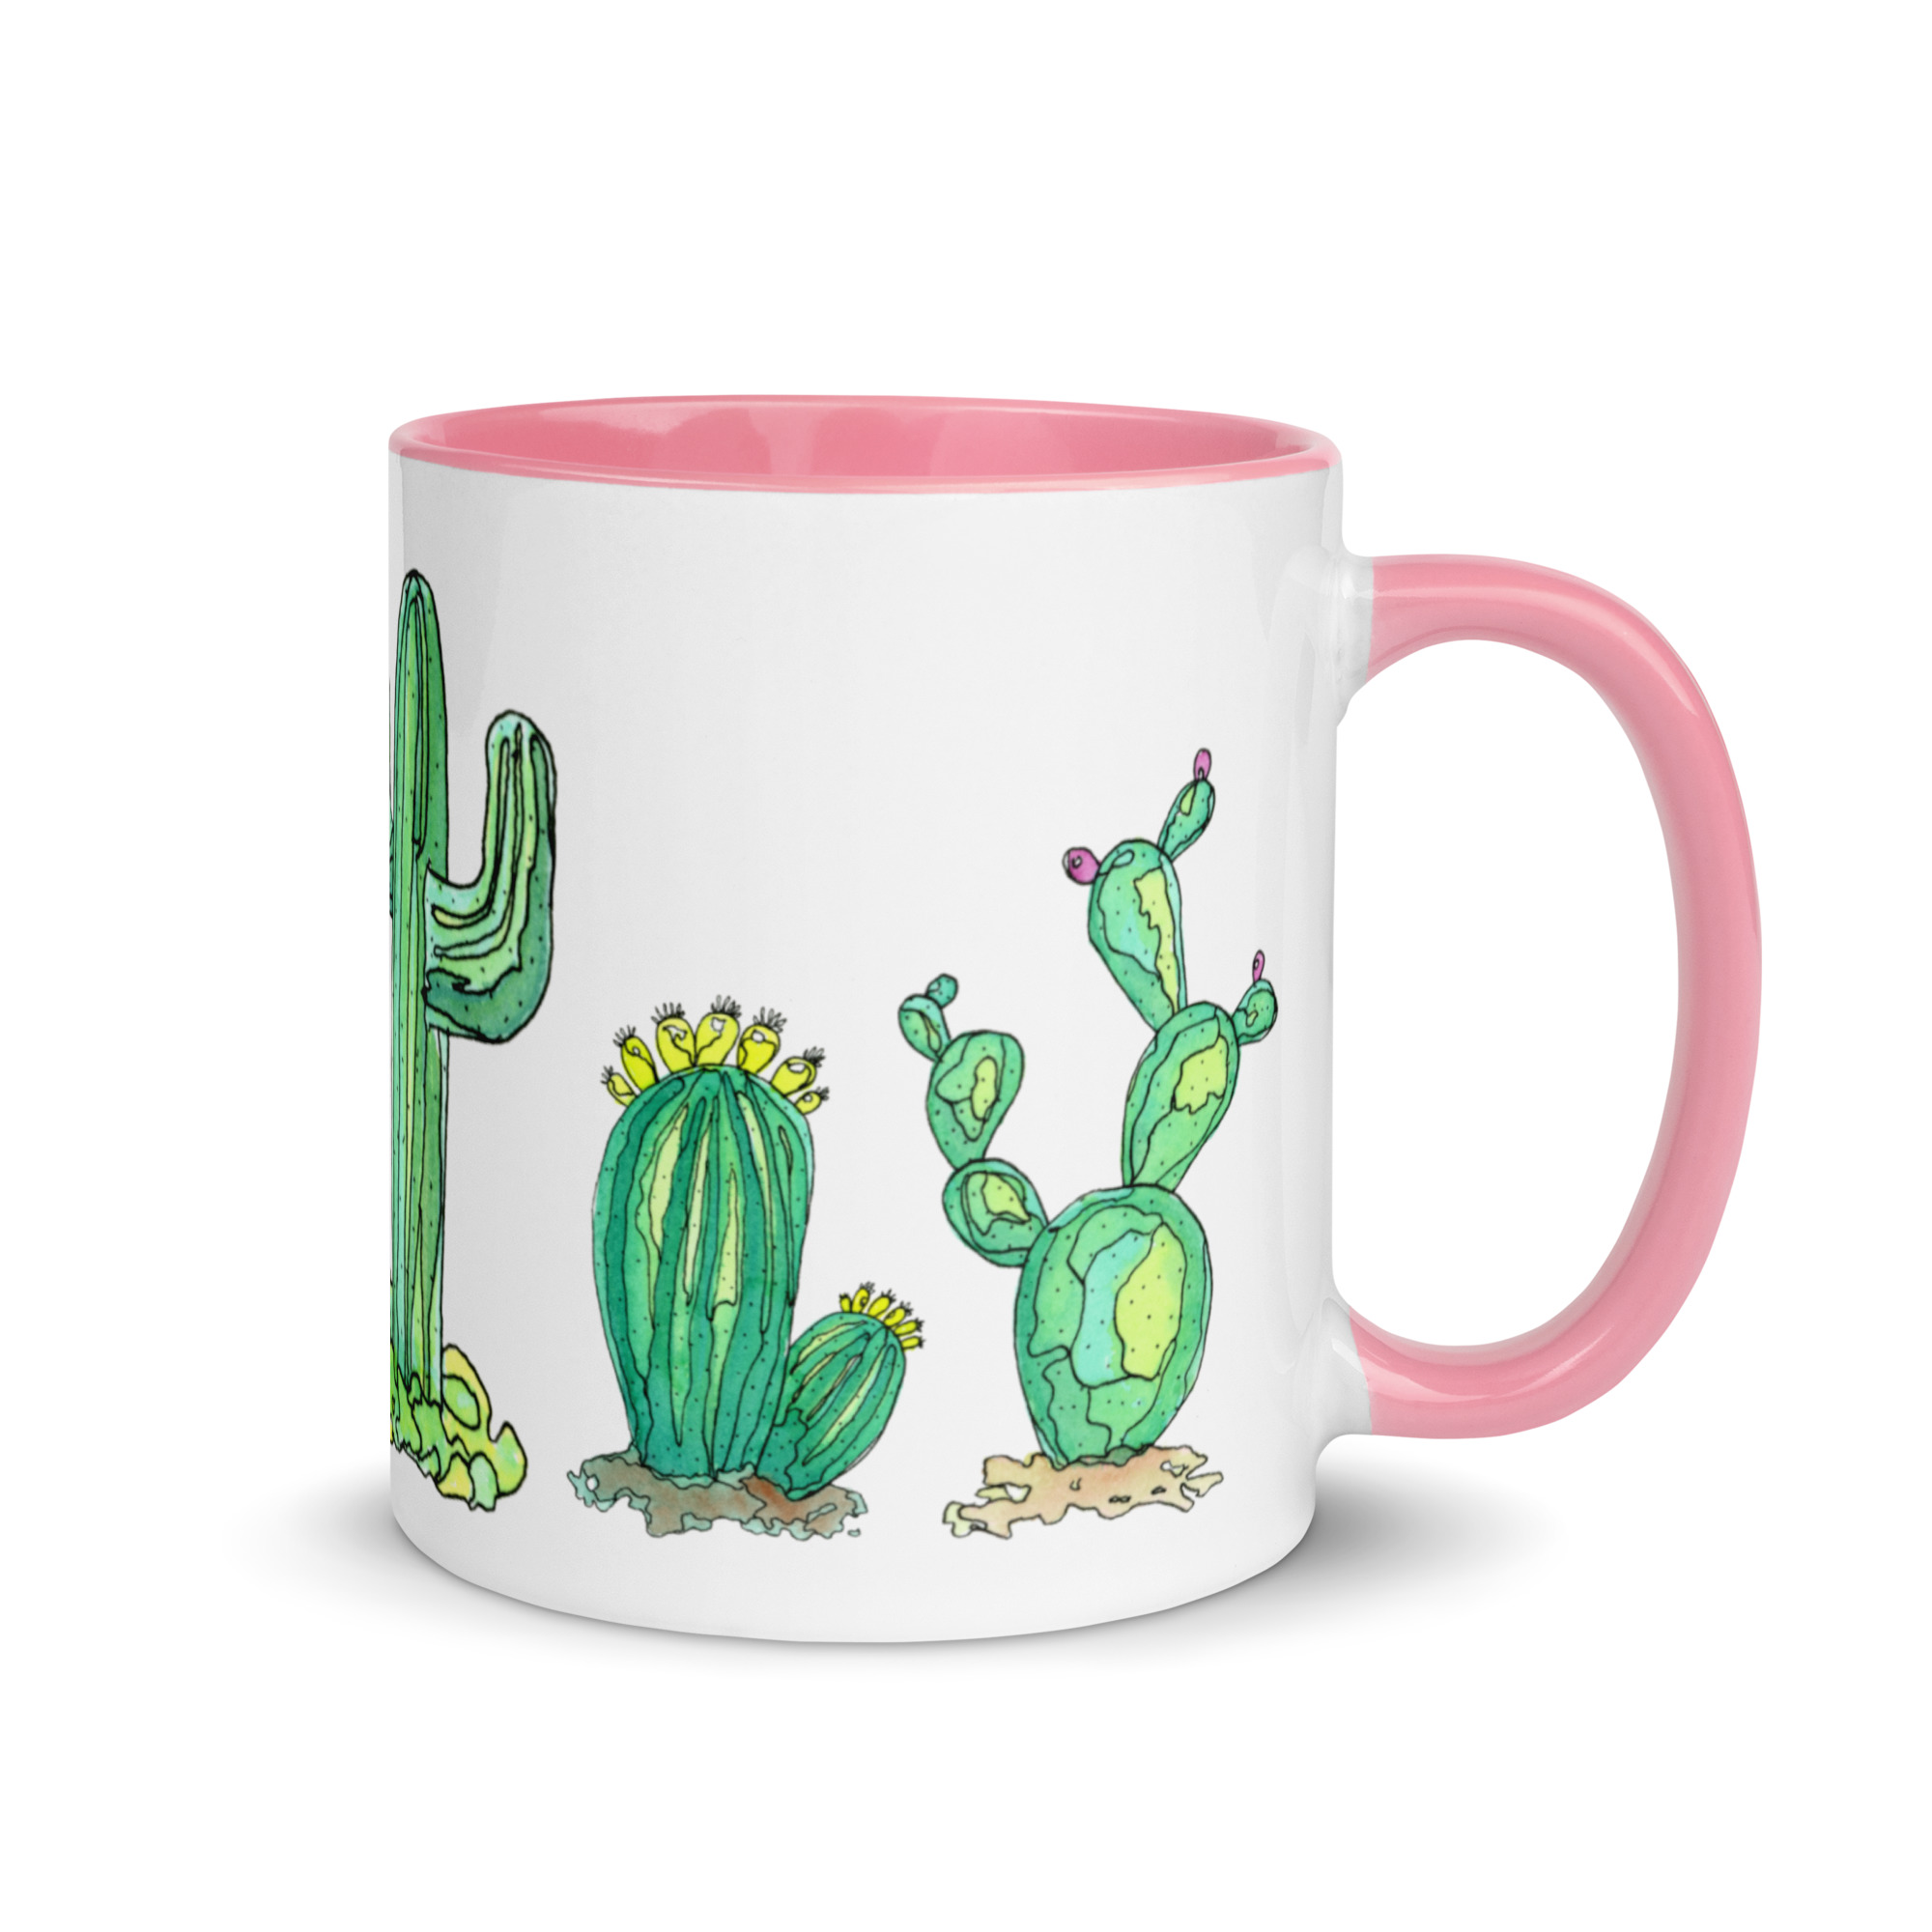 https://lisabussett.com/wp-content/uploads/white-ceramic-mug-with-color-inside-pink-11-oz-right-6562b0121d705.jpg